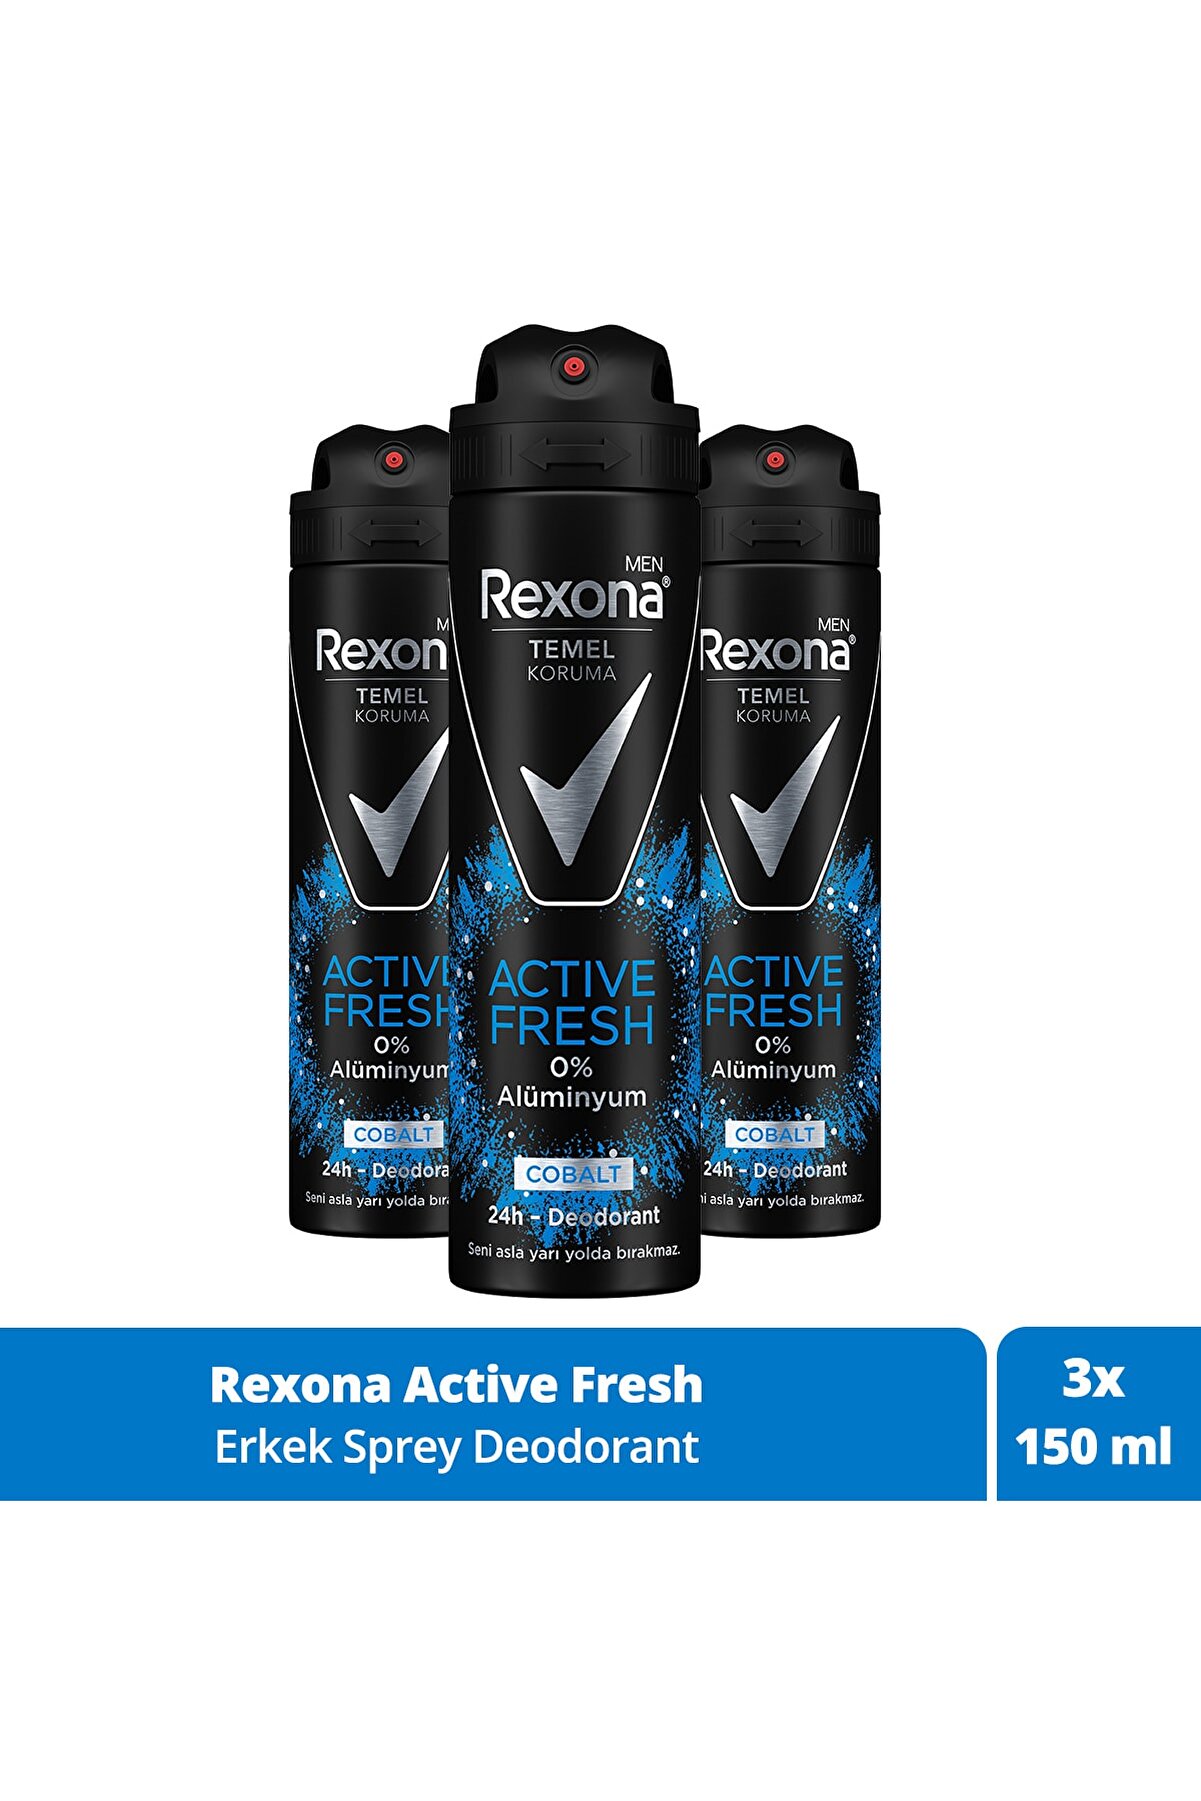 Rexona Men Temel Koruma Active Fresh Erkek Sprey Deodorant Cobalt 150 ml X3 Adet